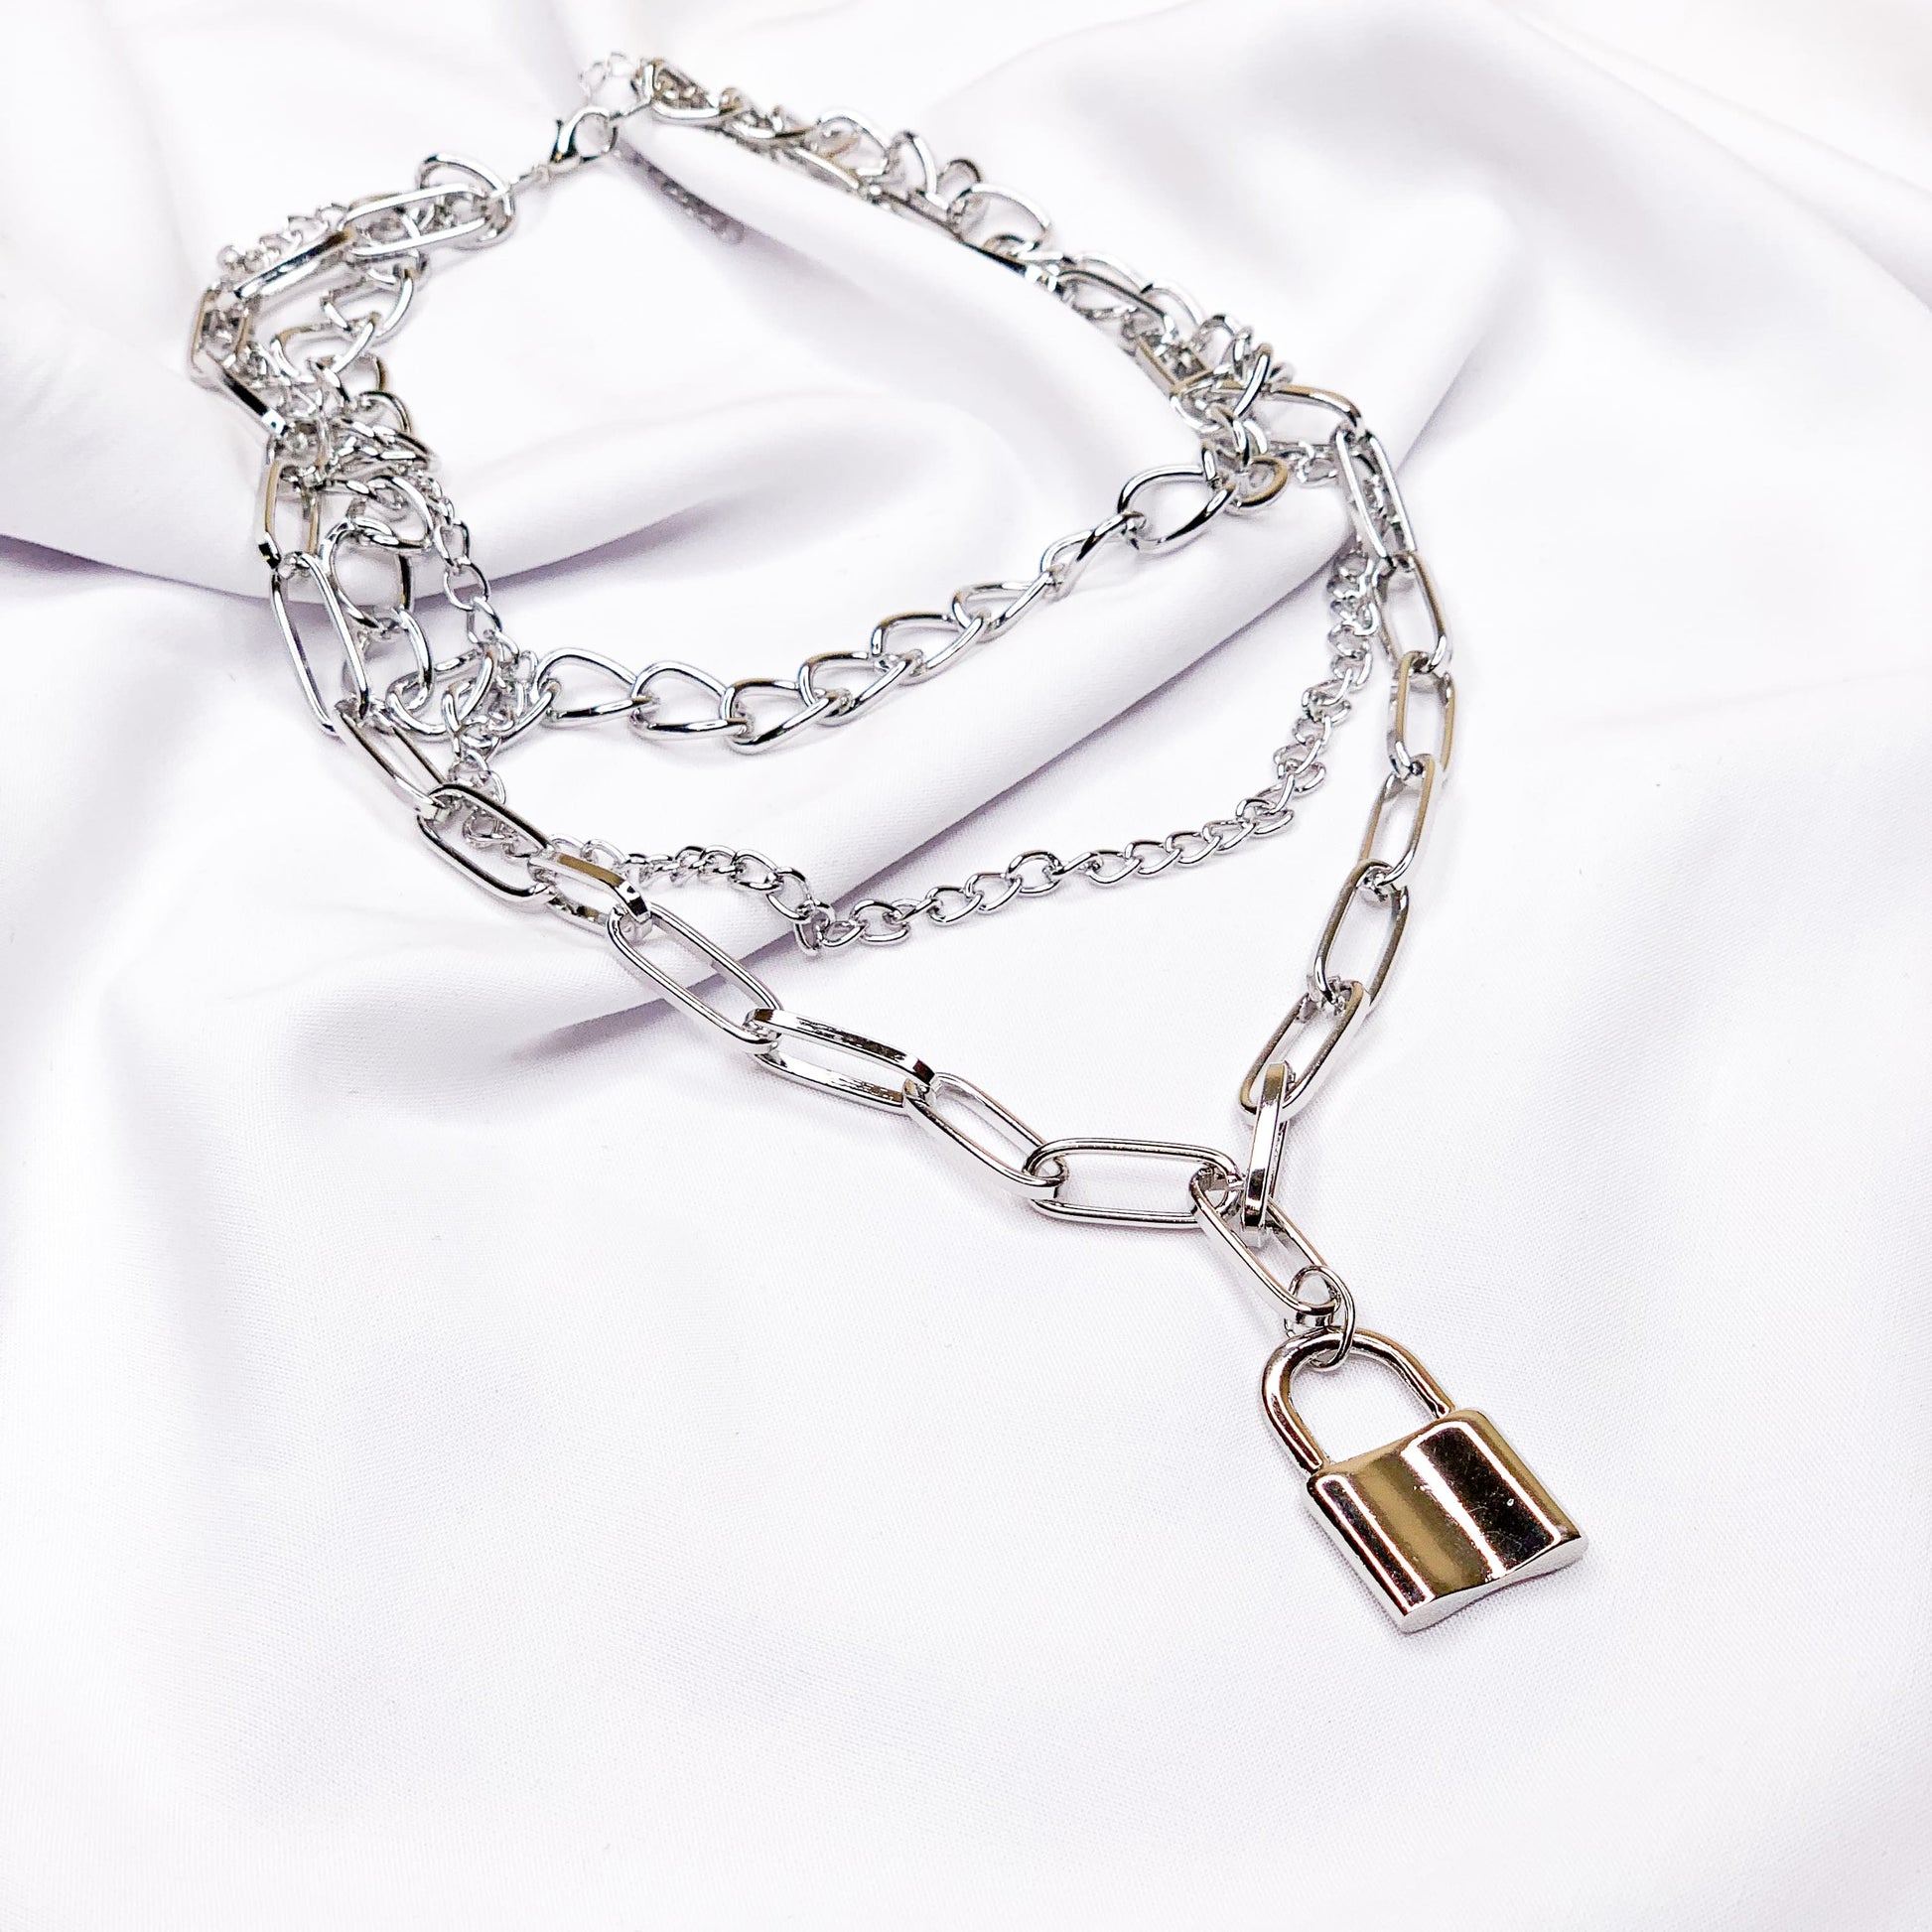 Hellen.V - Lock Pendant | Silver Chain | Necklaces 